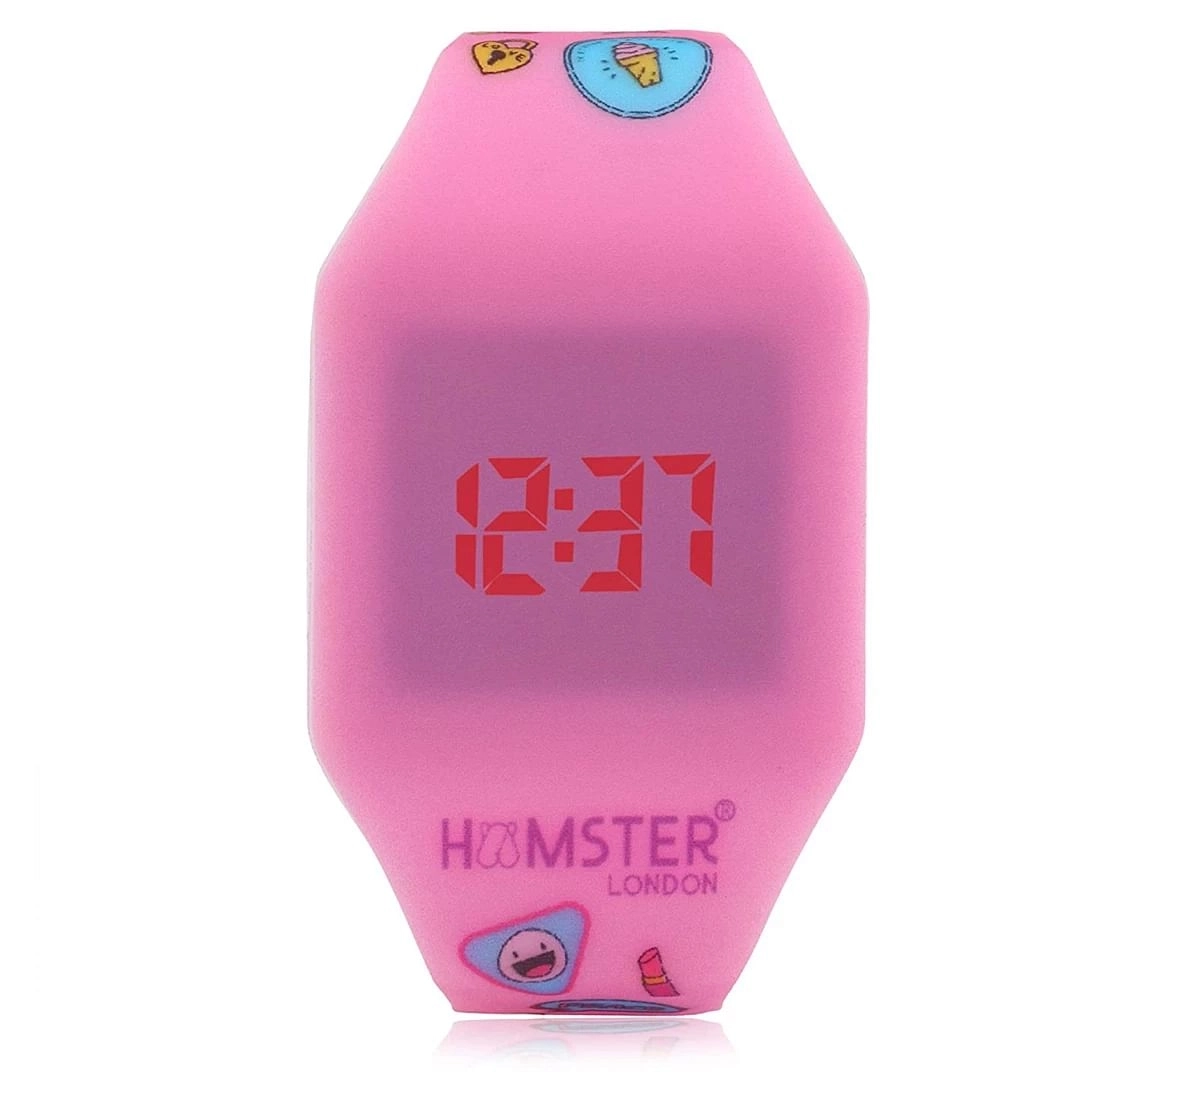 Hamster London Lol Unicorn Digital Watch Pink 3Y+